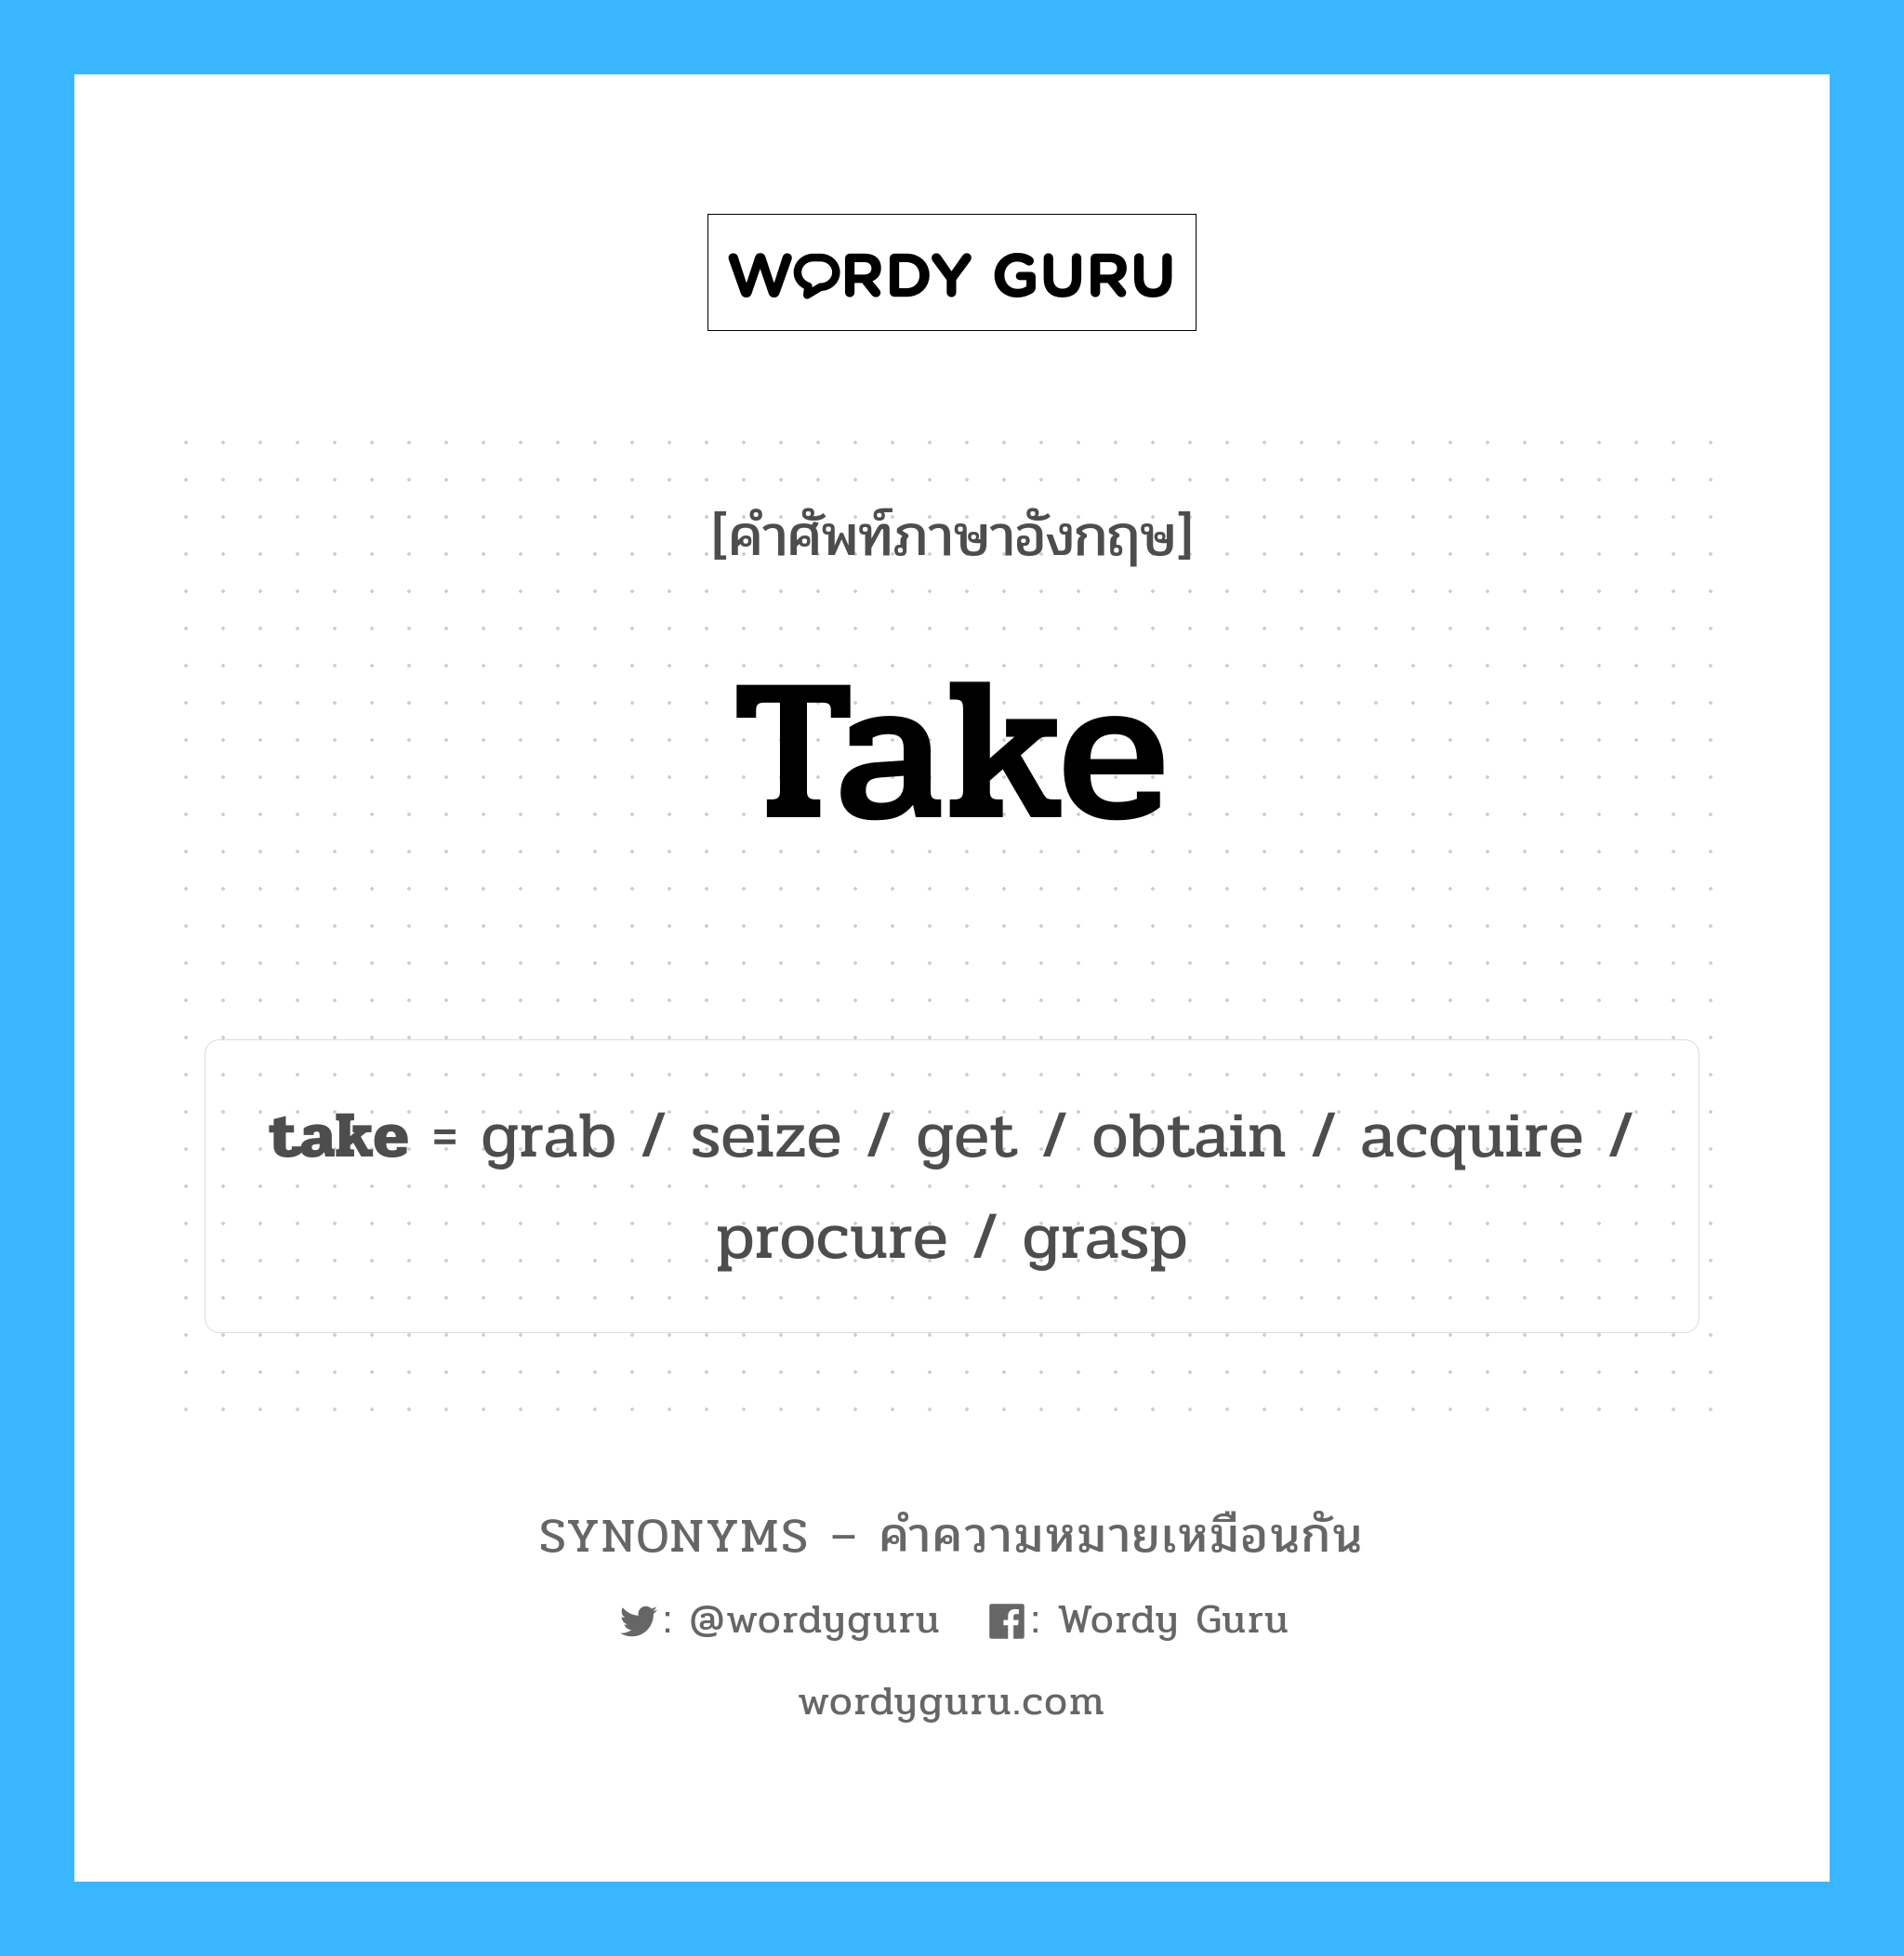 get เป็นหนึ่งใน take และมีคำอื่น ๆ อีกดังนี้, คำศัพท์ภาษาอังกฤษ get ความหมายคล้ายกันกับ take แปลว่า รับ หมวด take